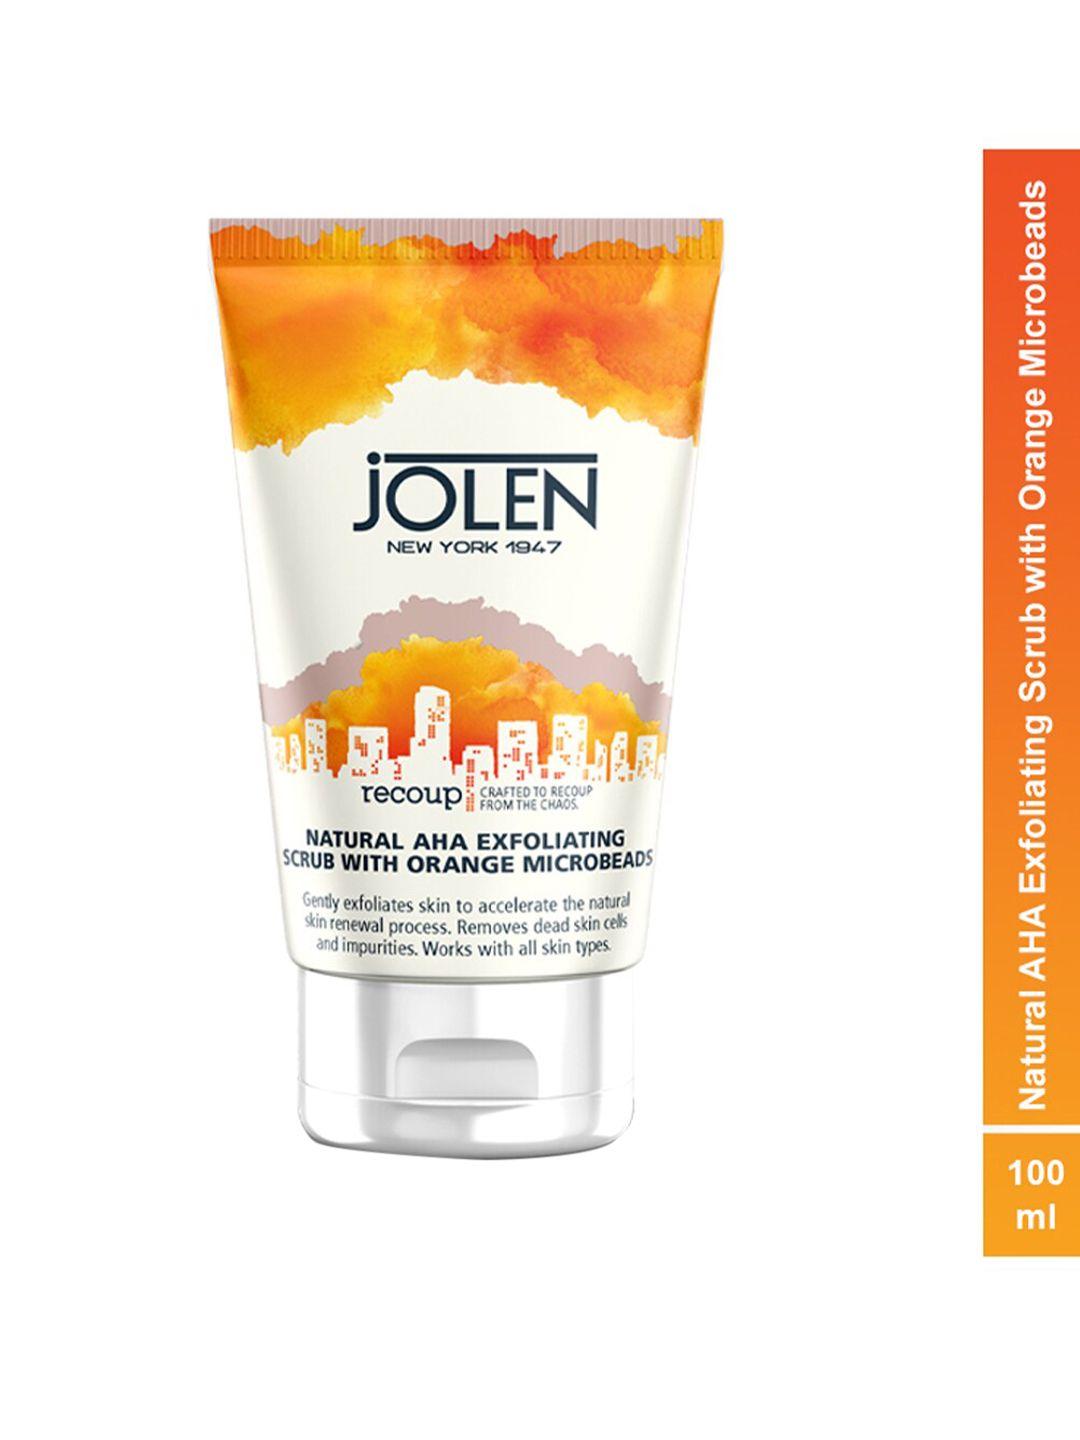 jolen new york natural aha with orange micro beads exfoliating scrub -100ml